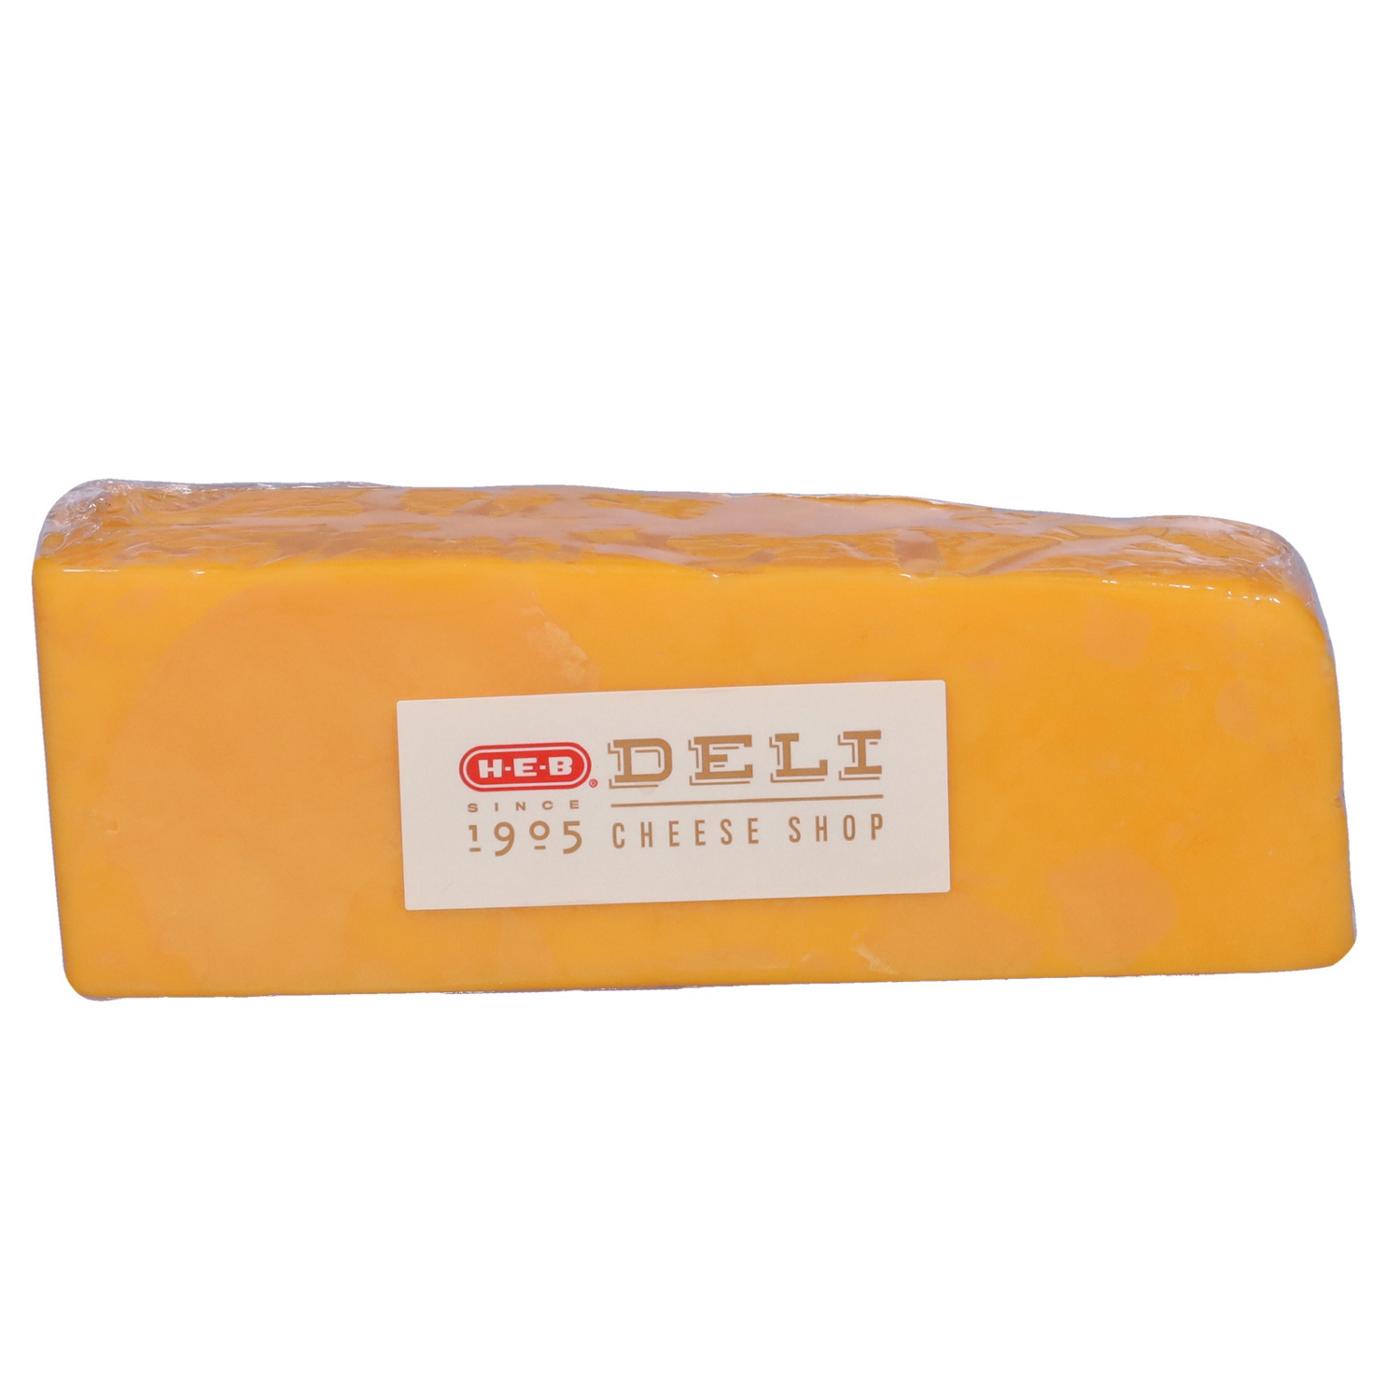 H-E-B Deli Artisan Yellow Cheddar Cheese; image 2 of 2